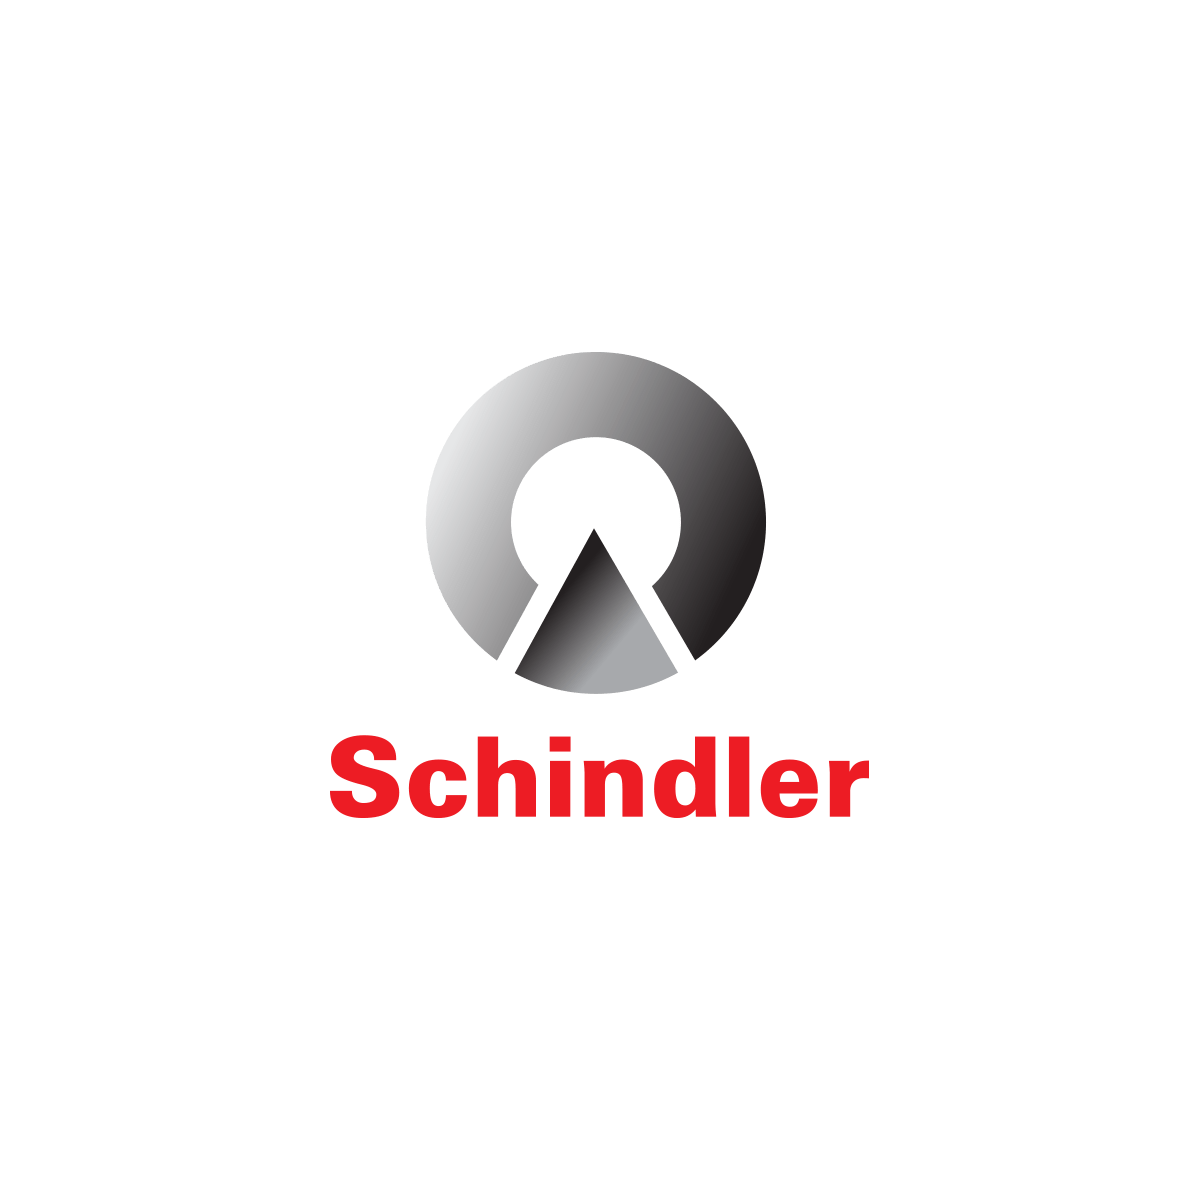 Schindler Elevator and Inkling